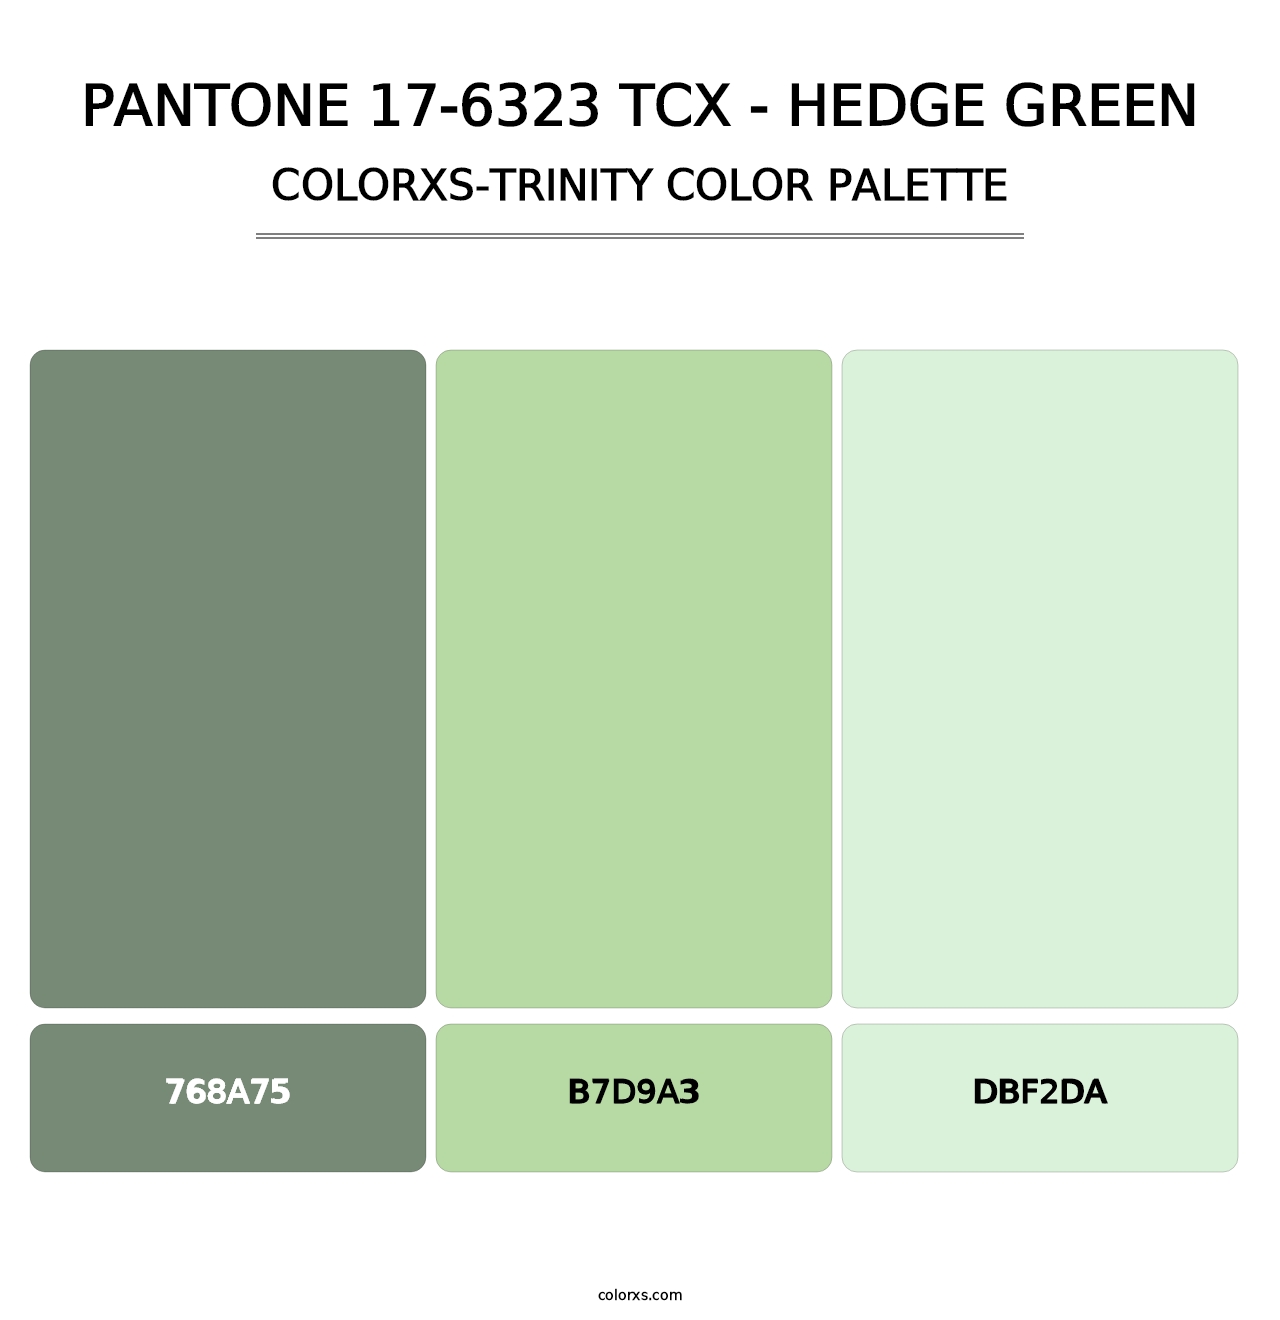 PANTONE 17-6323 TCX - Hedge Green - Colorxs Trinity Palette